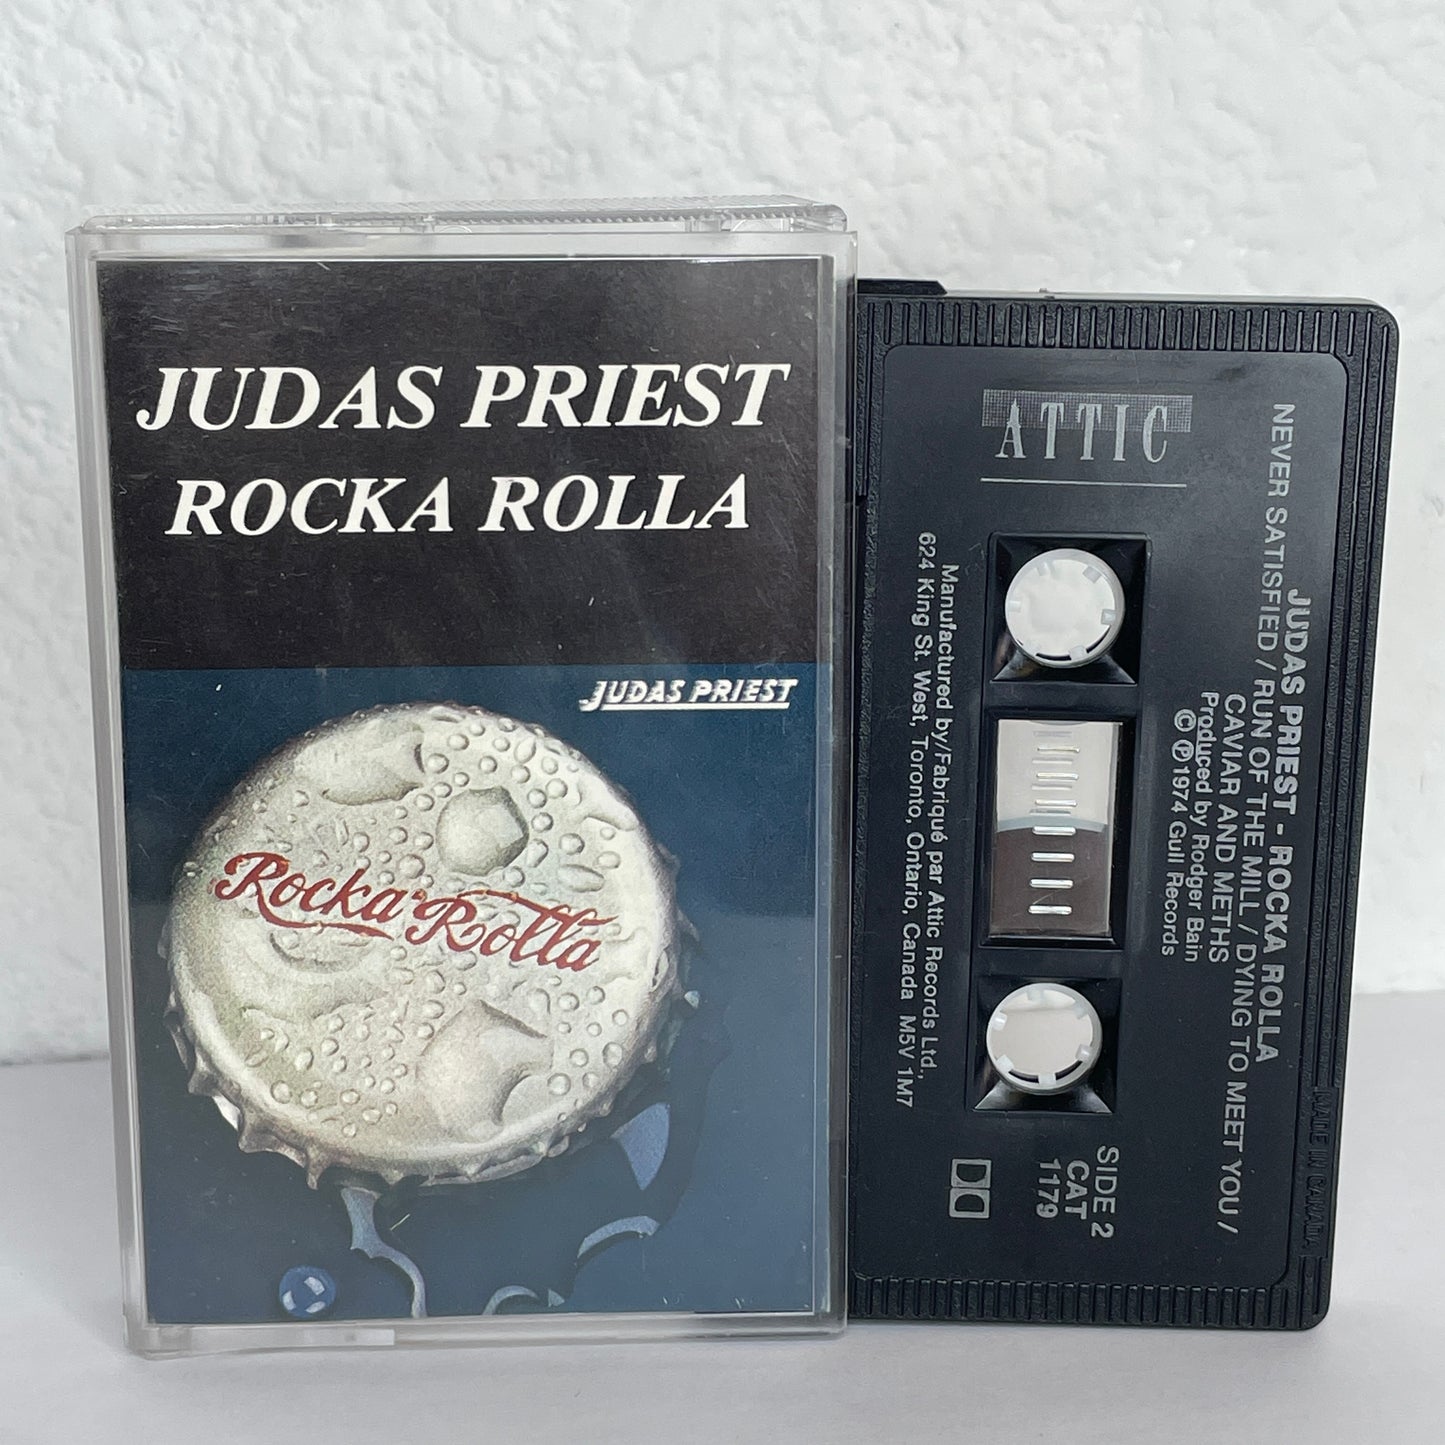 Judas Priest - Rocka Rolla original cassette tape